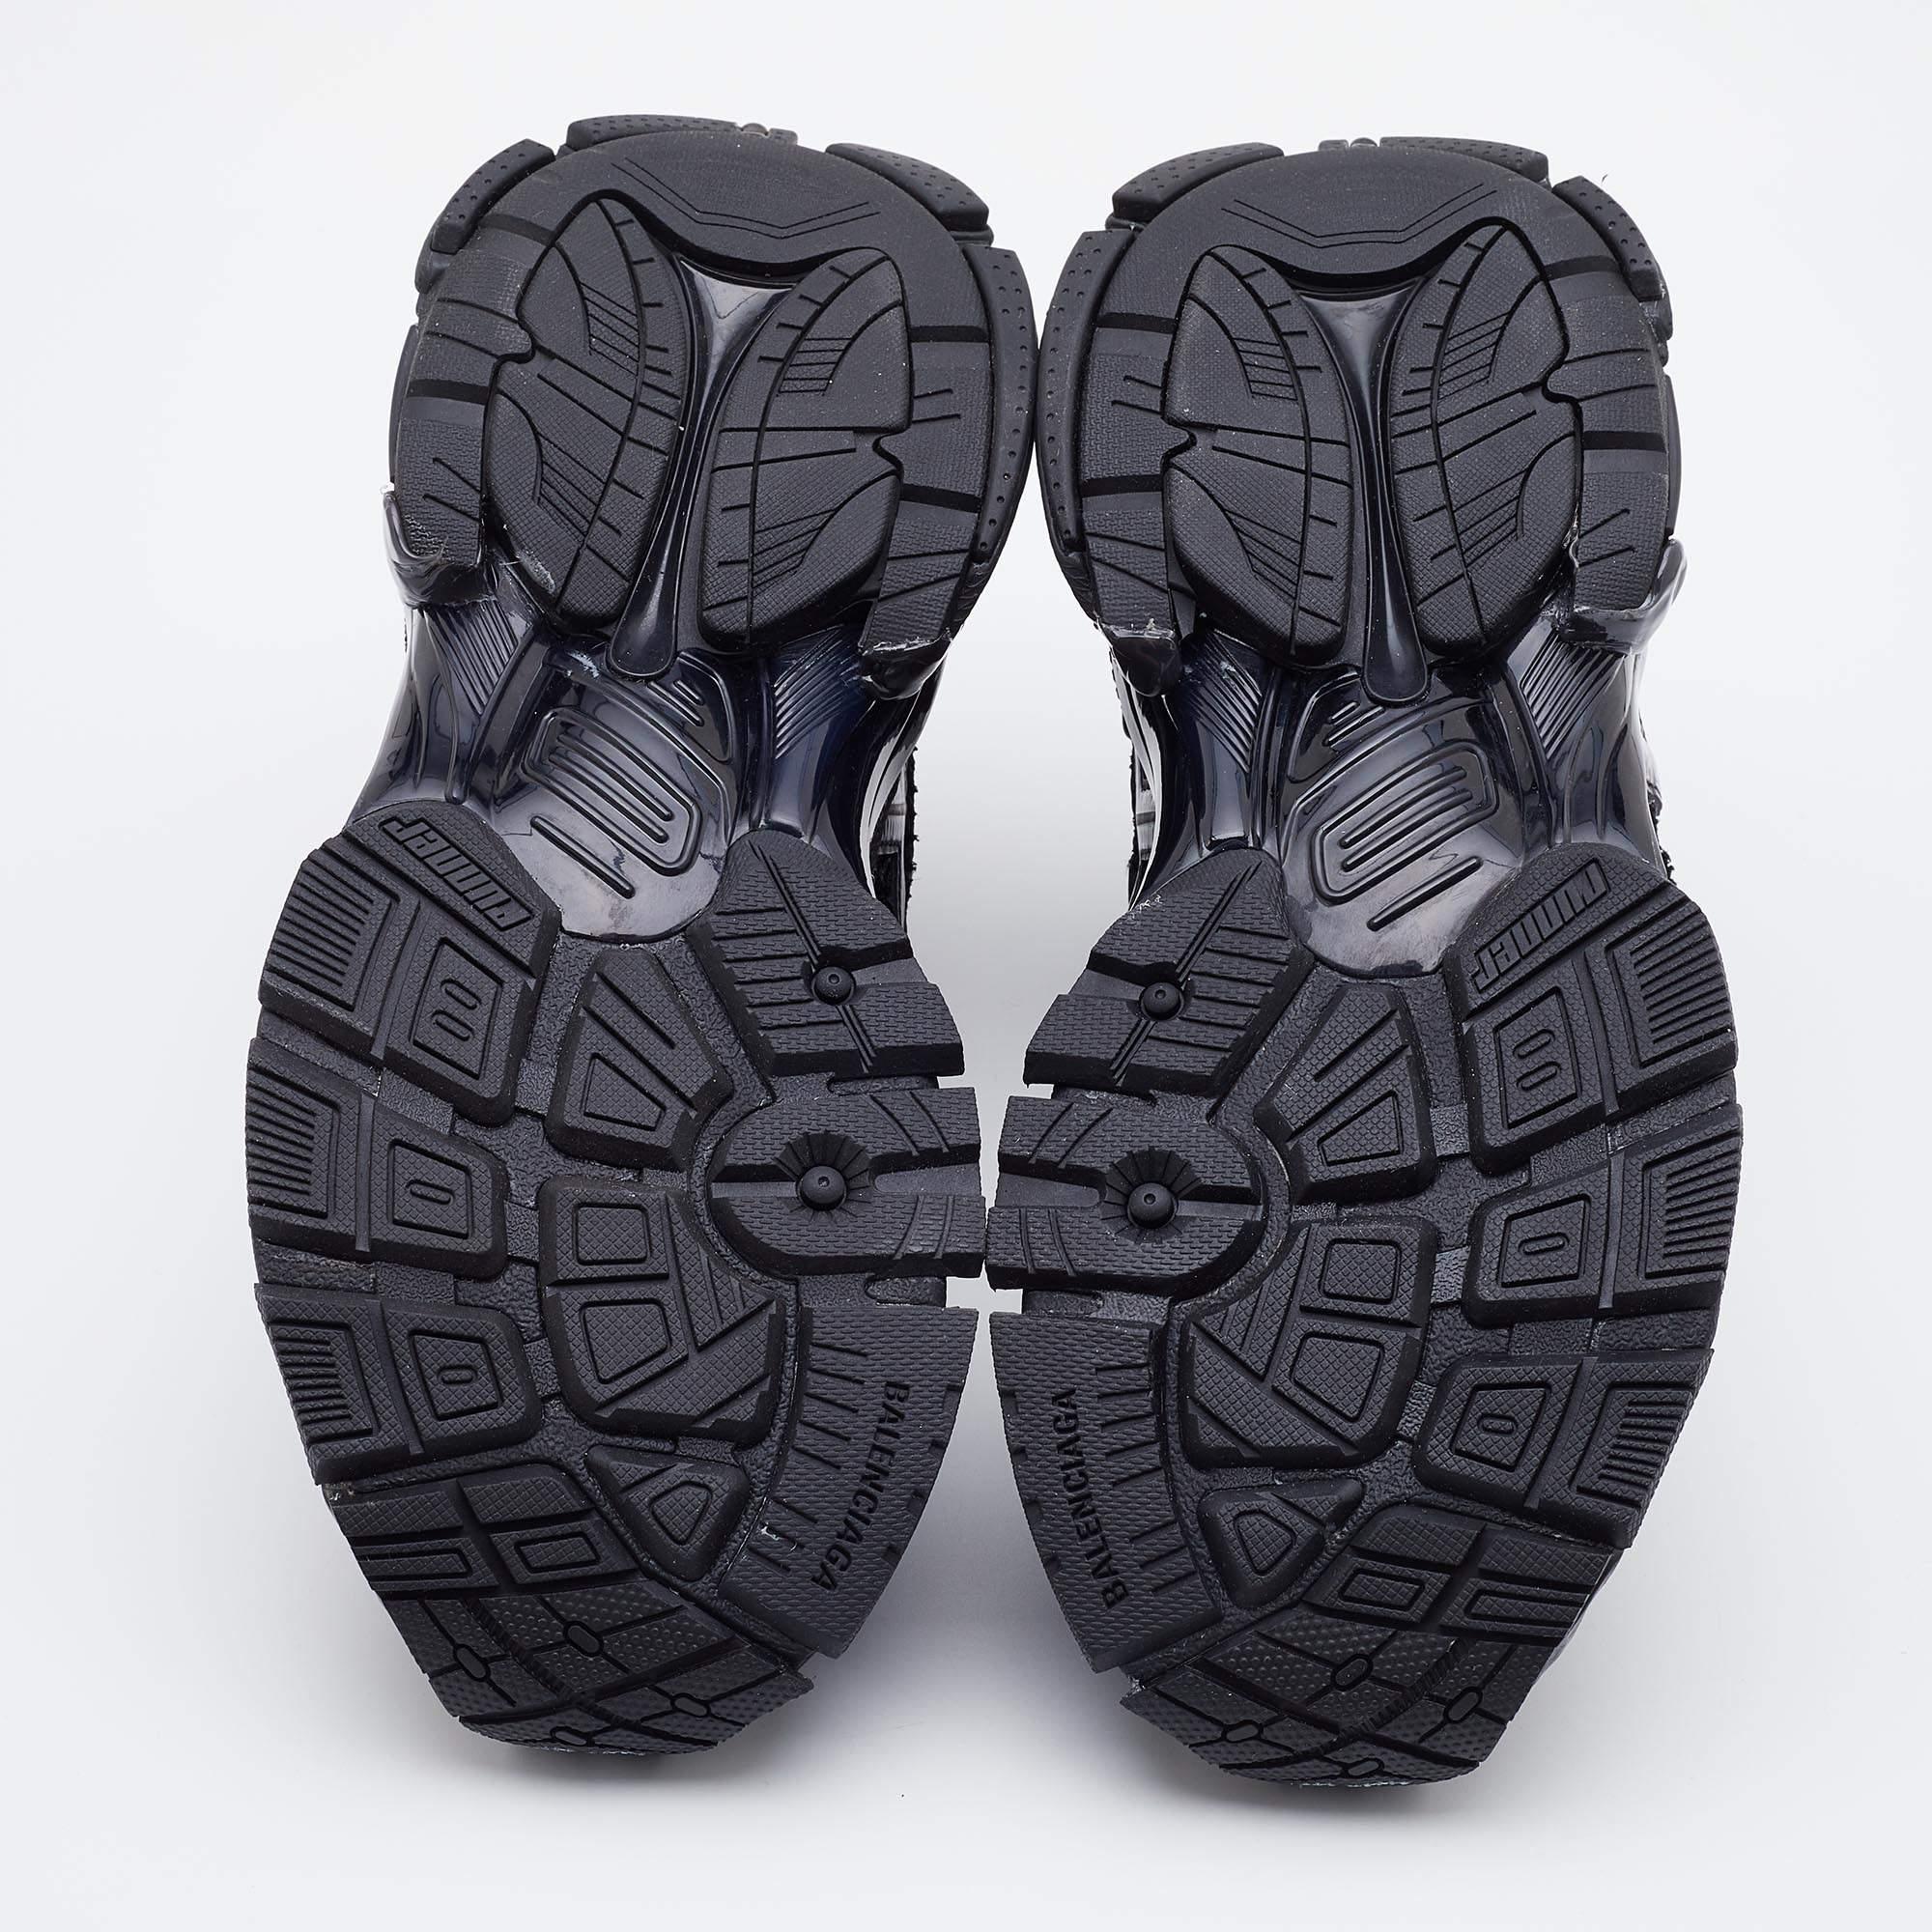 Balenciaga Black Neoprene, Leather and Mesh Sneakers Size 39 5